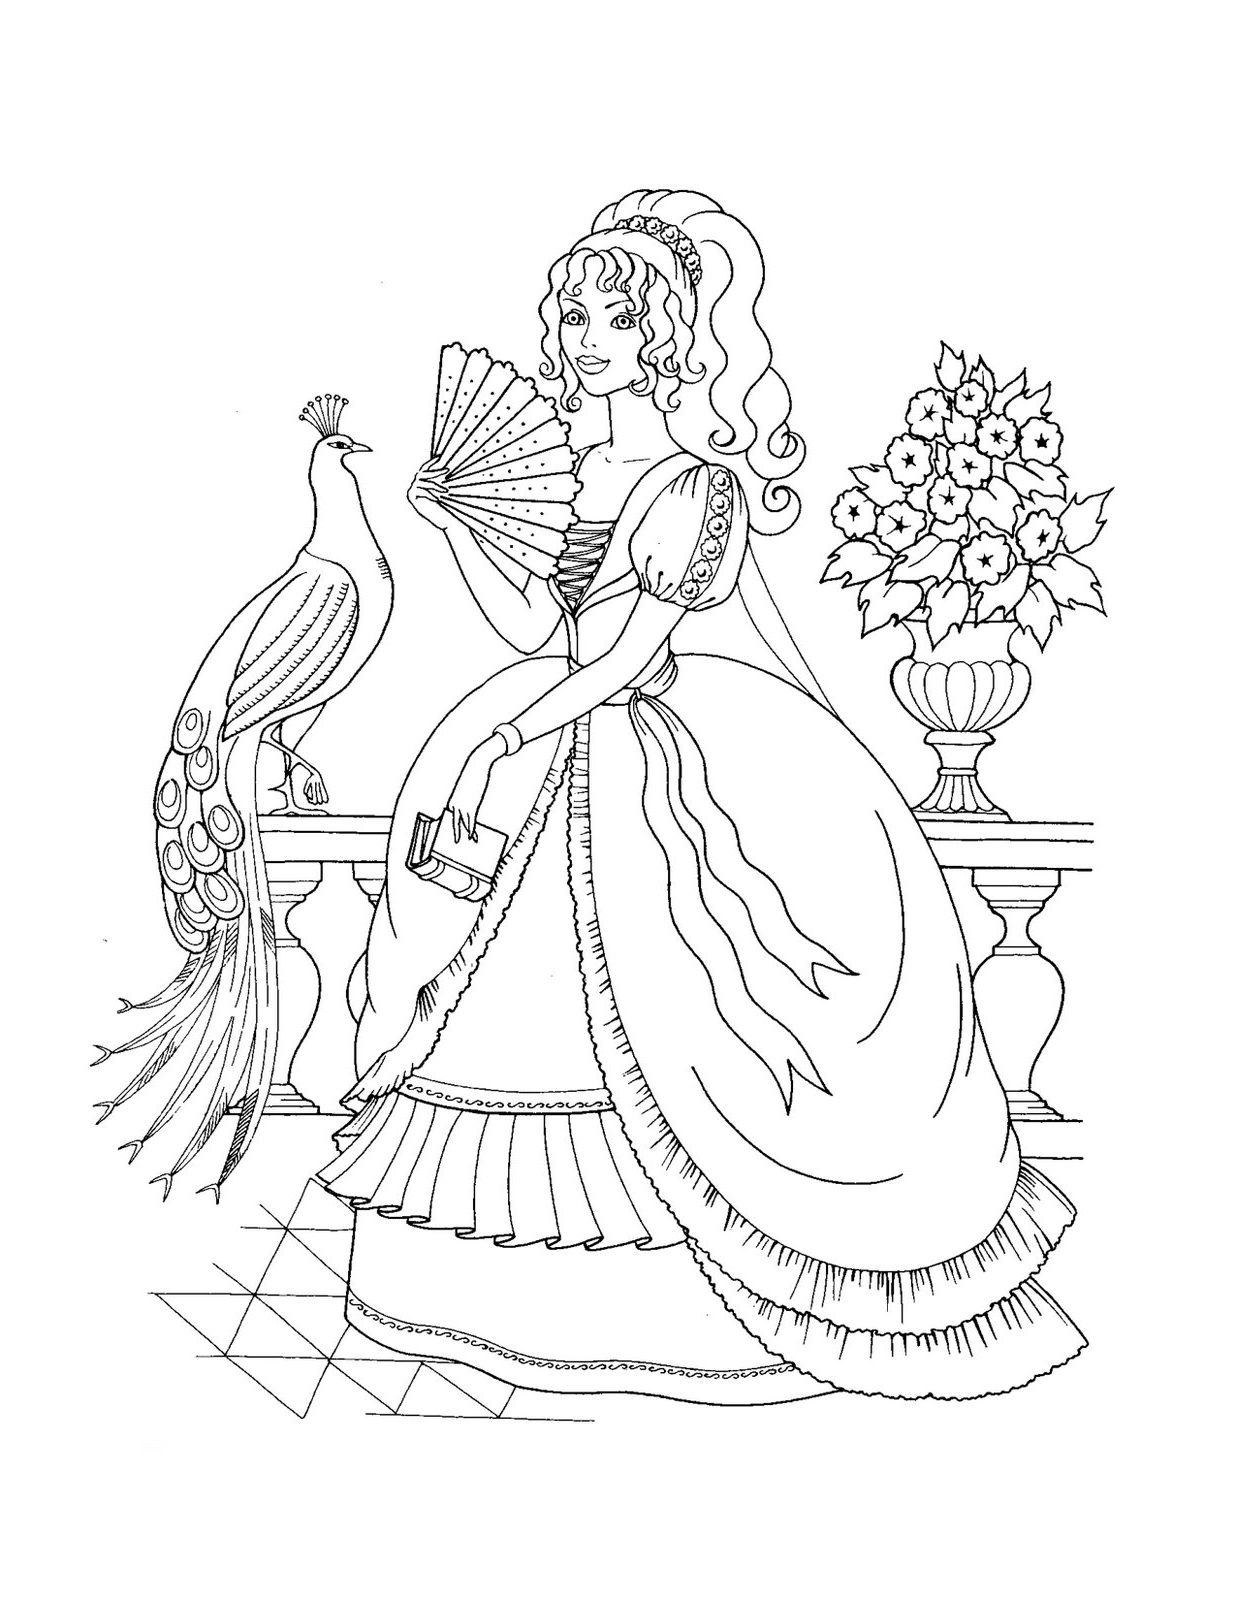 Drawing Princess 20 Characters – Printable coloring pages